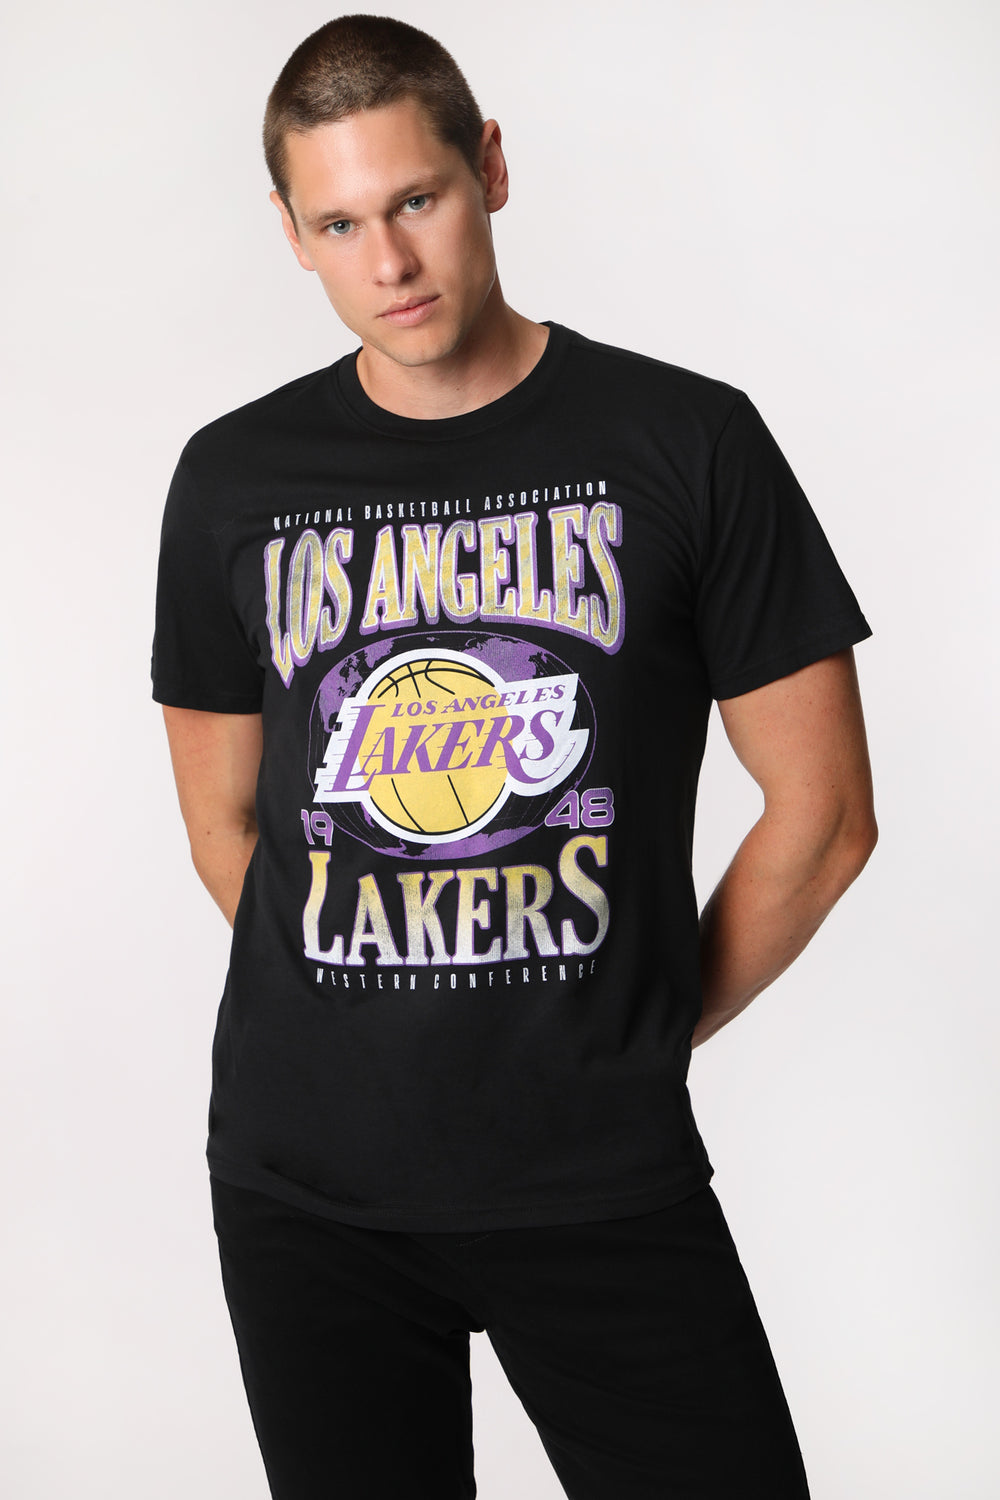 Mens Los Angeles Lakers T-Shirt Mens Los Angeles Lakers T-Shirt